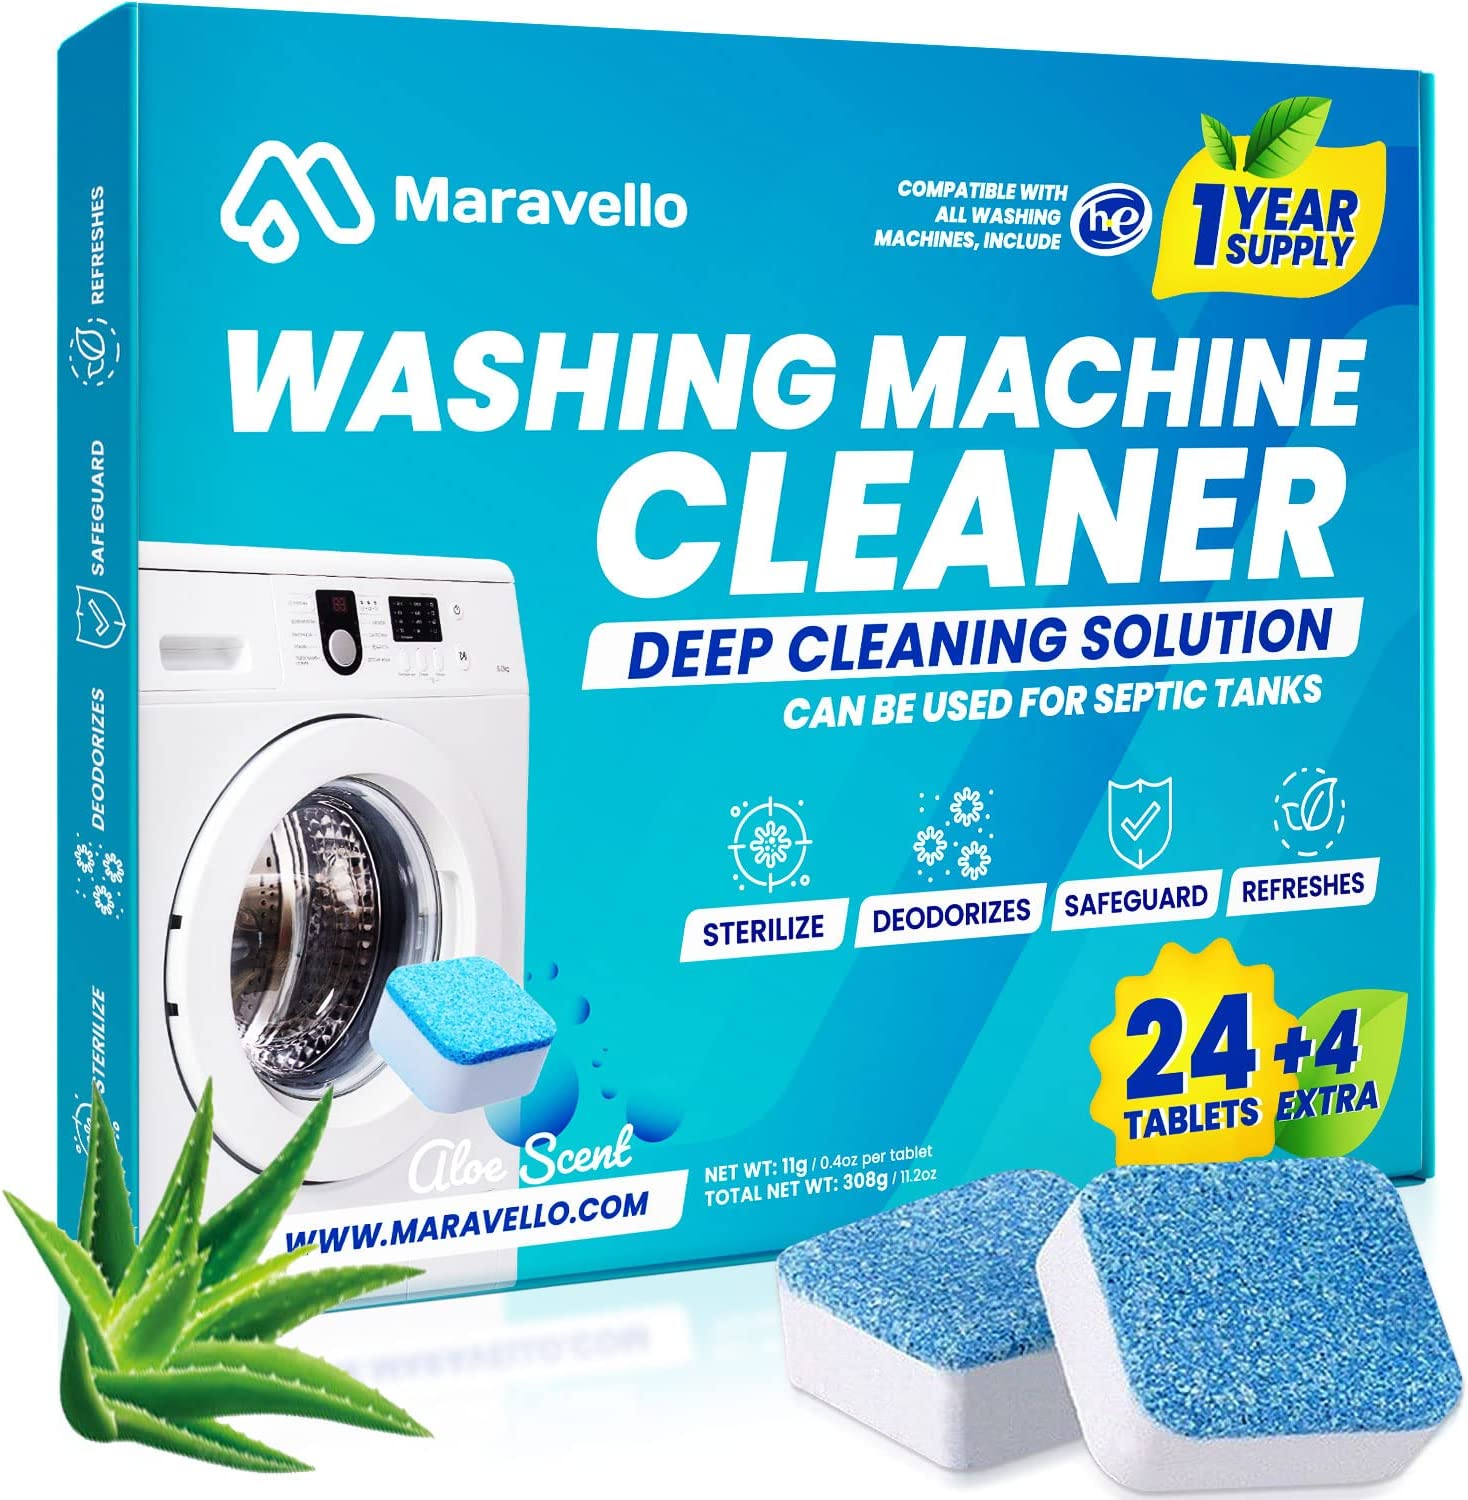 Eco-Friendly Washing Machine Cleaner Pods